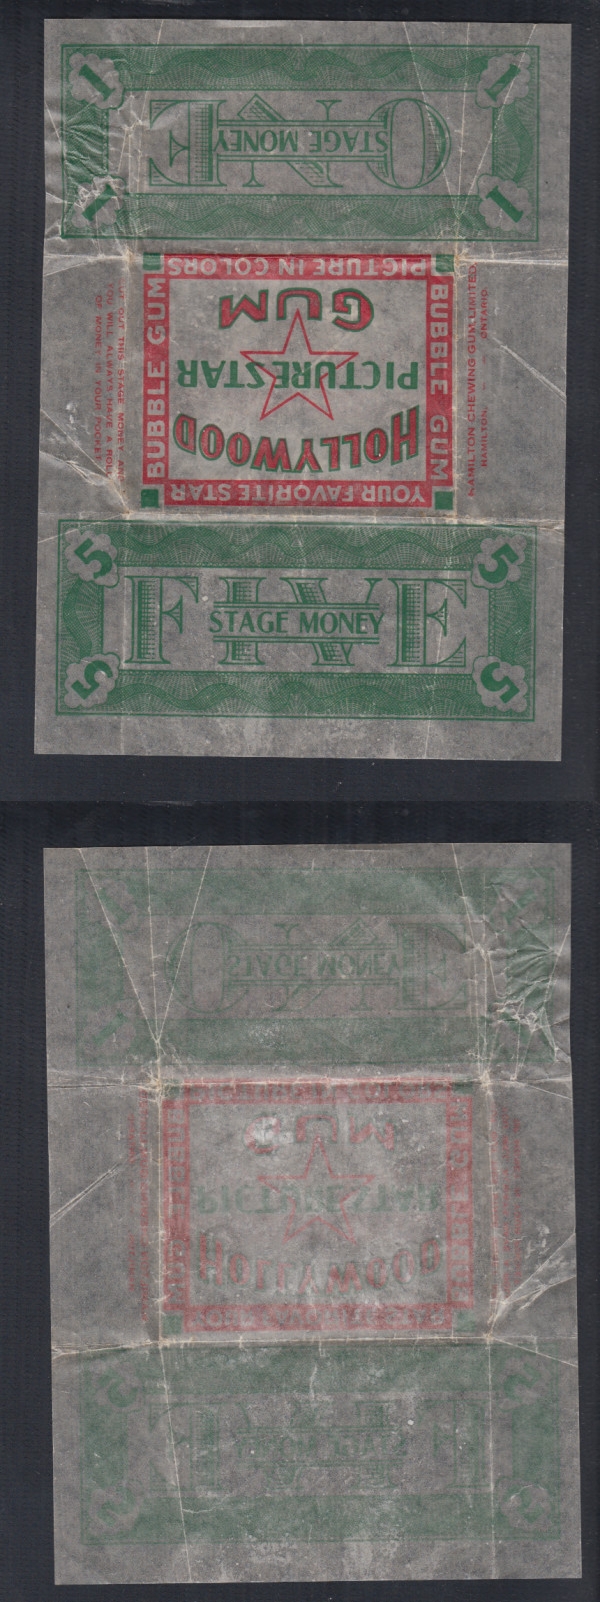 1938 V289 HAMILTON GUM HOLLYWOOD CARD WRAPPER photo